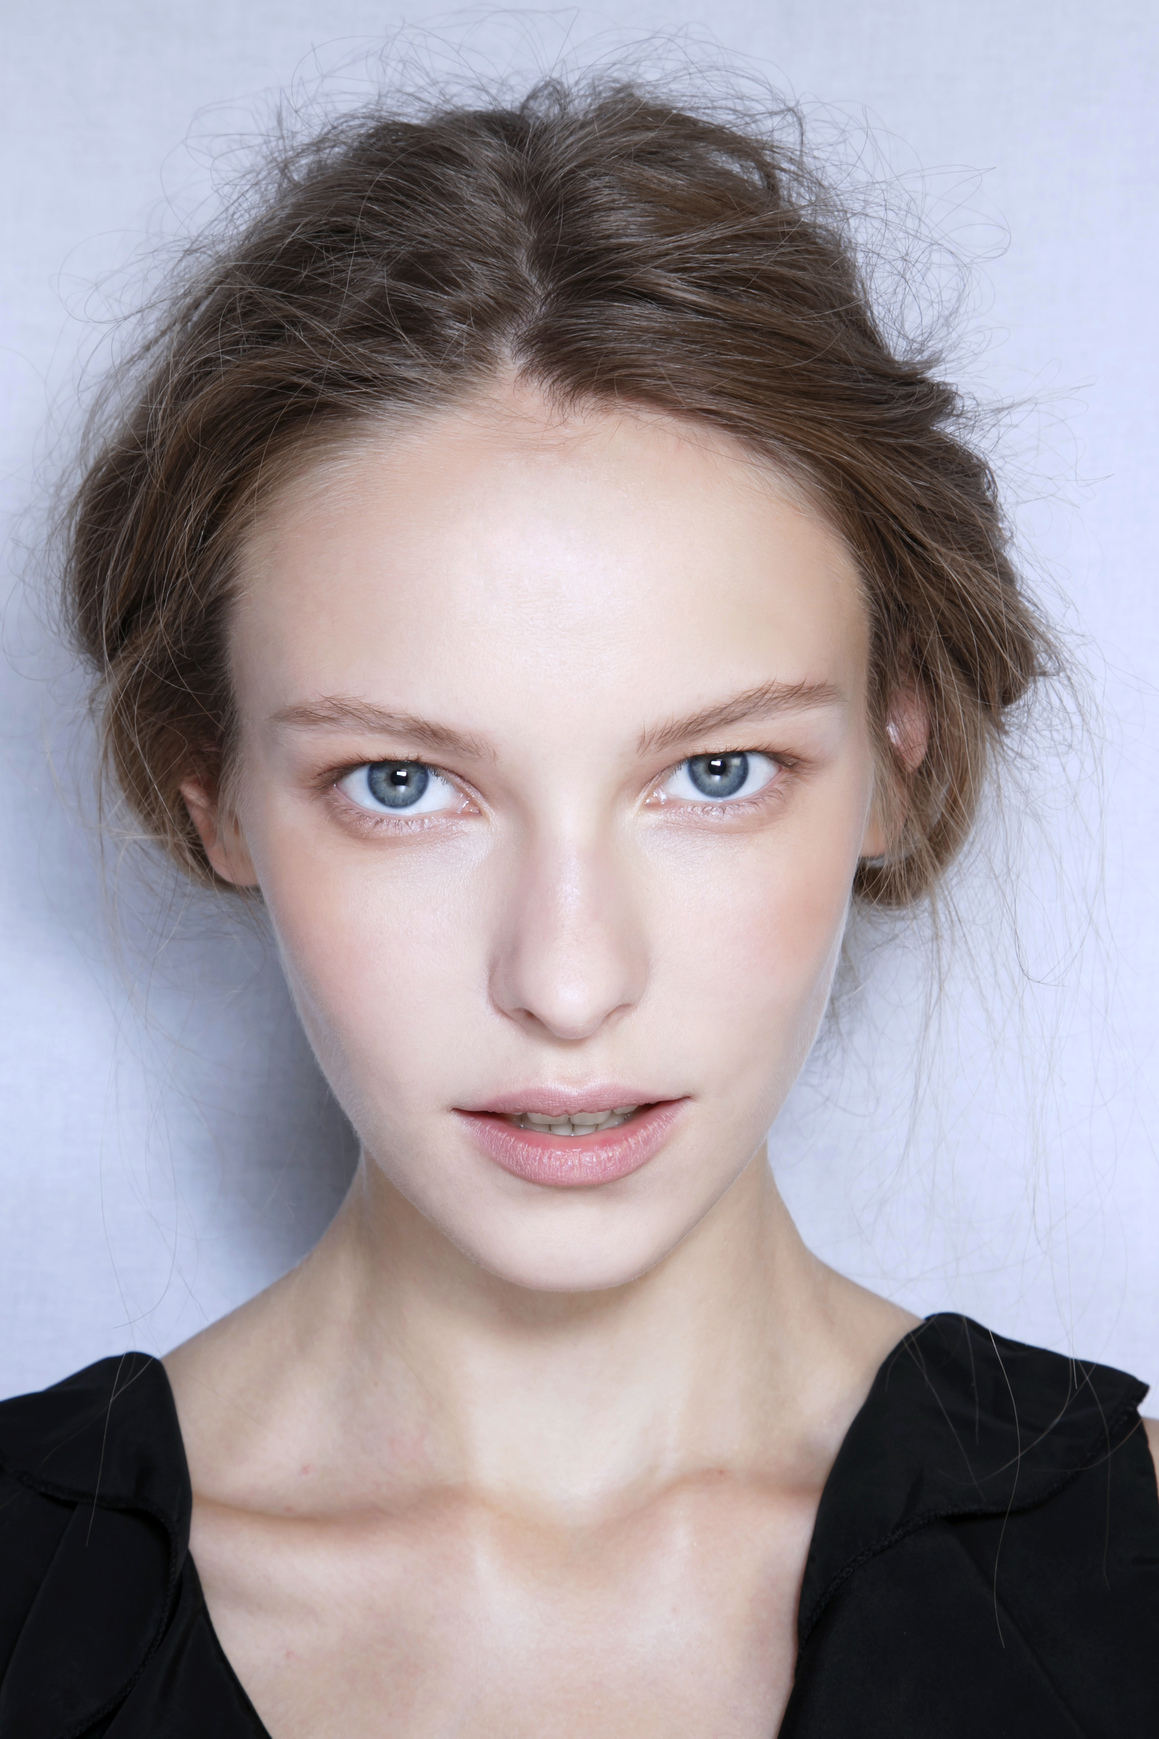 Neutral Eye Makeup For Dark Skin 8 Ways To Get Natural Looking Makeup Stylecaster